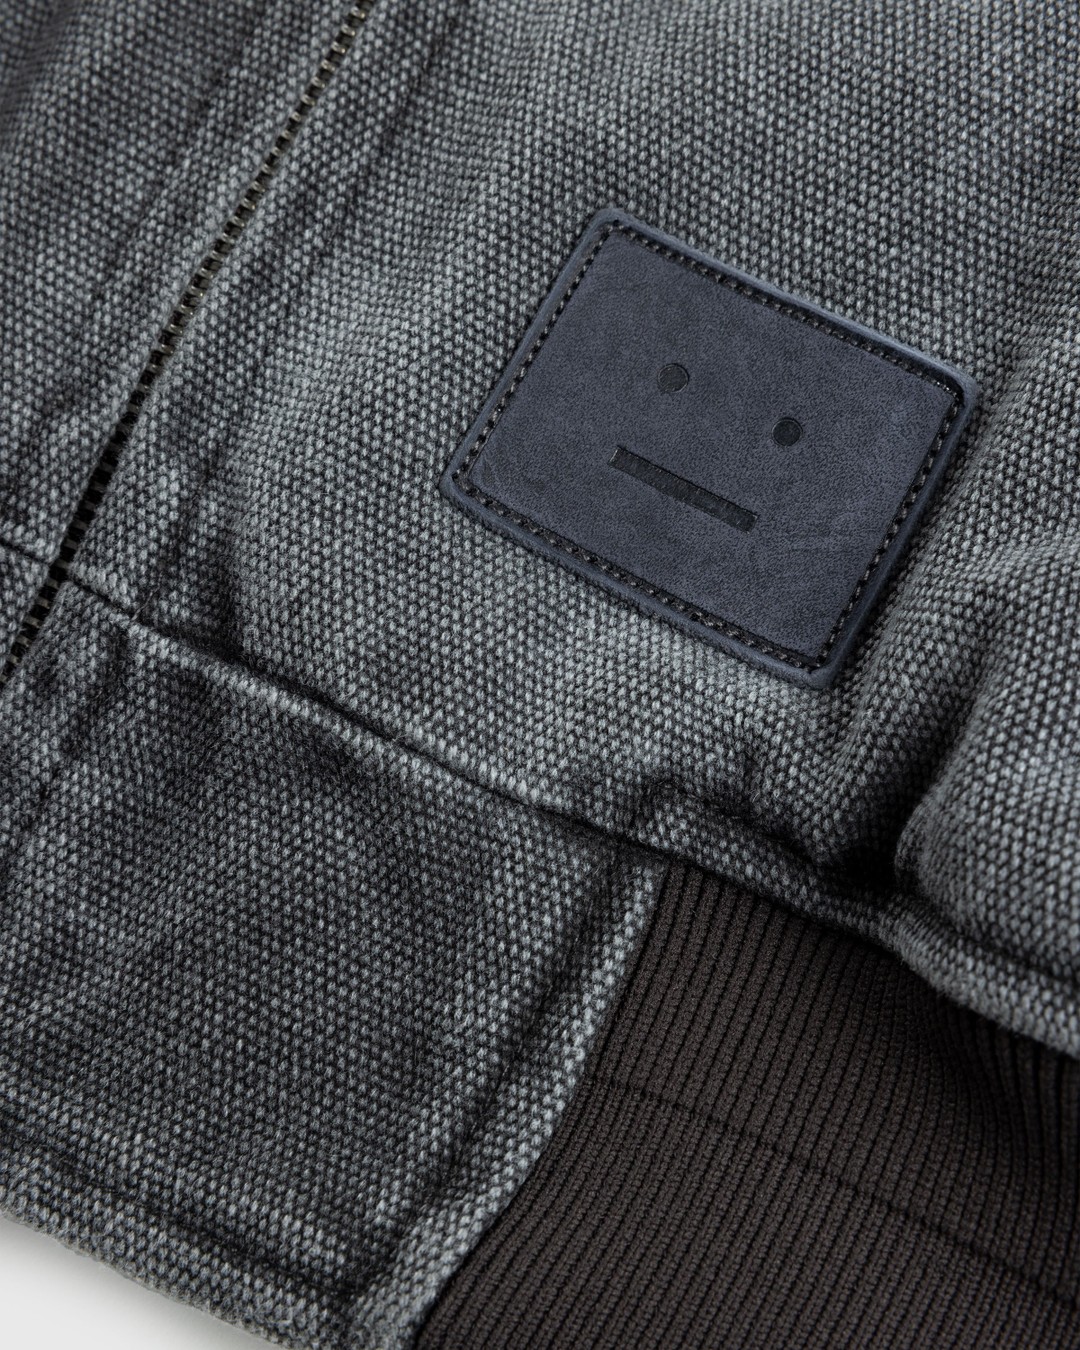 Acne Studios – Cotton Canvas Bomber Jacket Grey - Outerwear - Grey - Image 3